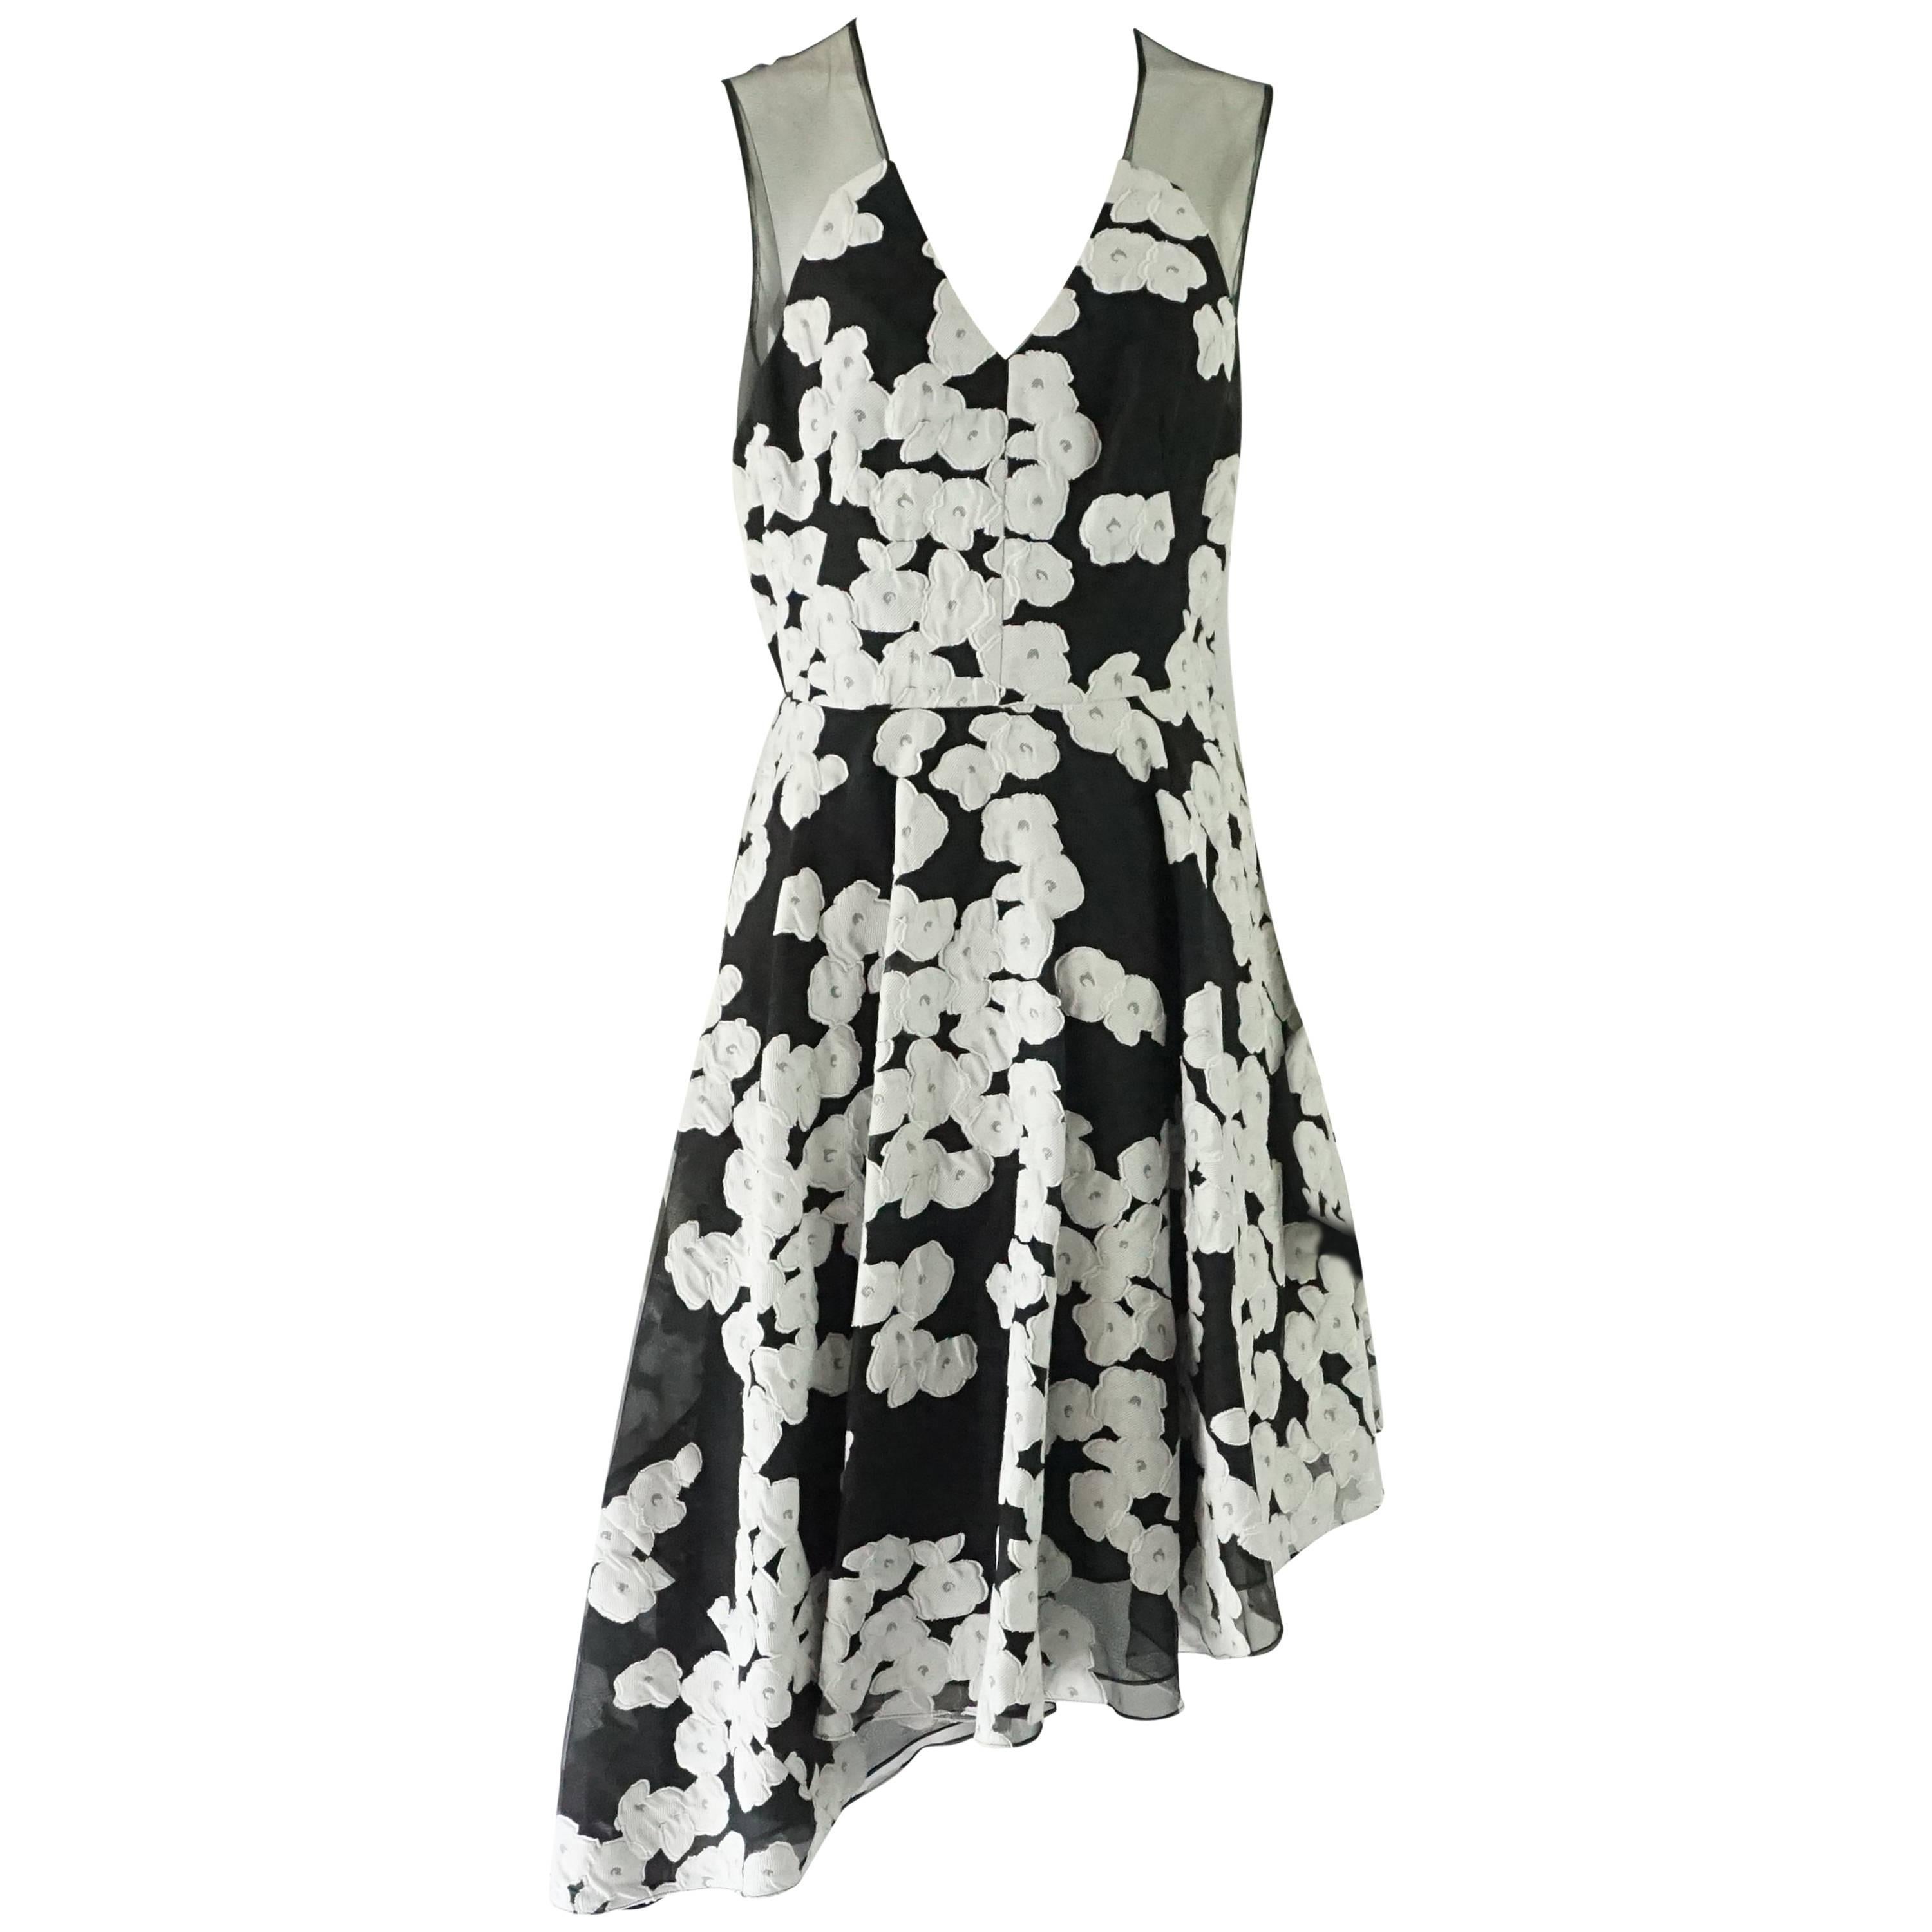 Lela Rose Black and White Floral Illusion Neck Dress 